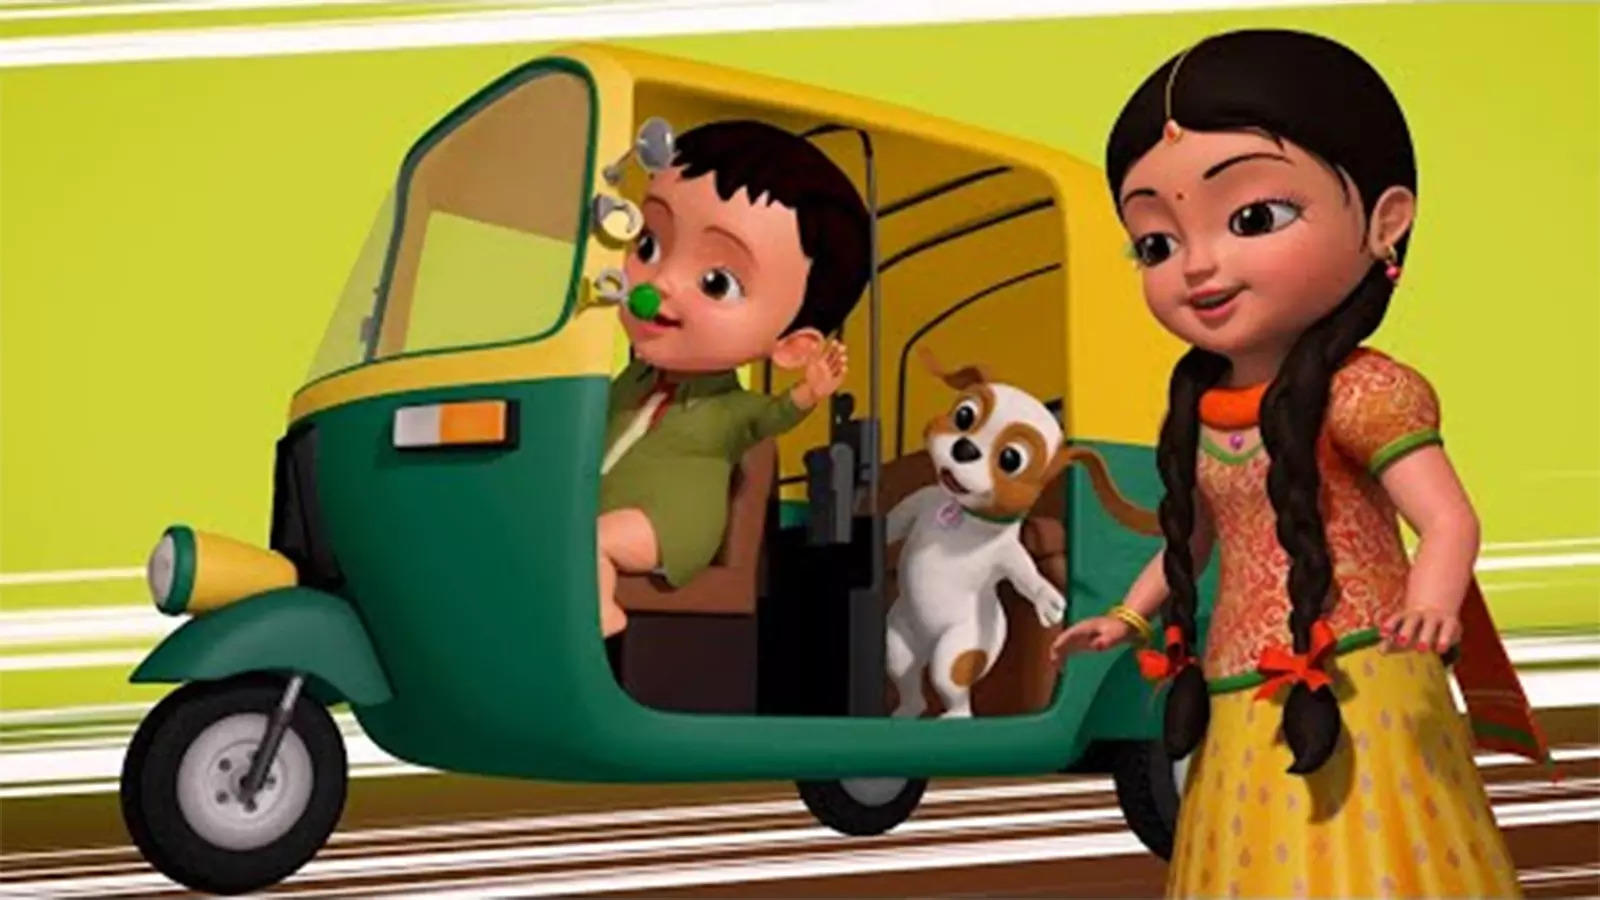 Telugu Nursery Rhymes: Kids Video Song in Telugu 'Auto Vaccindi Cudandi -  Playing with Toys'